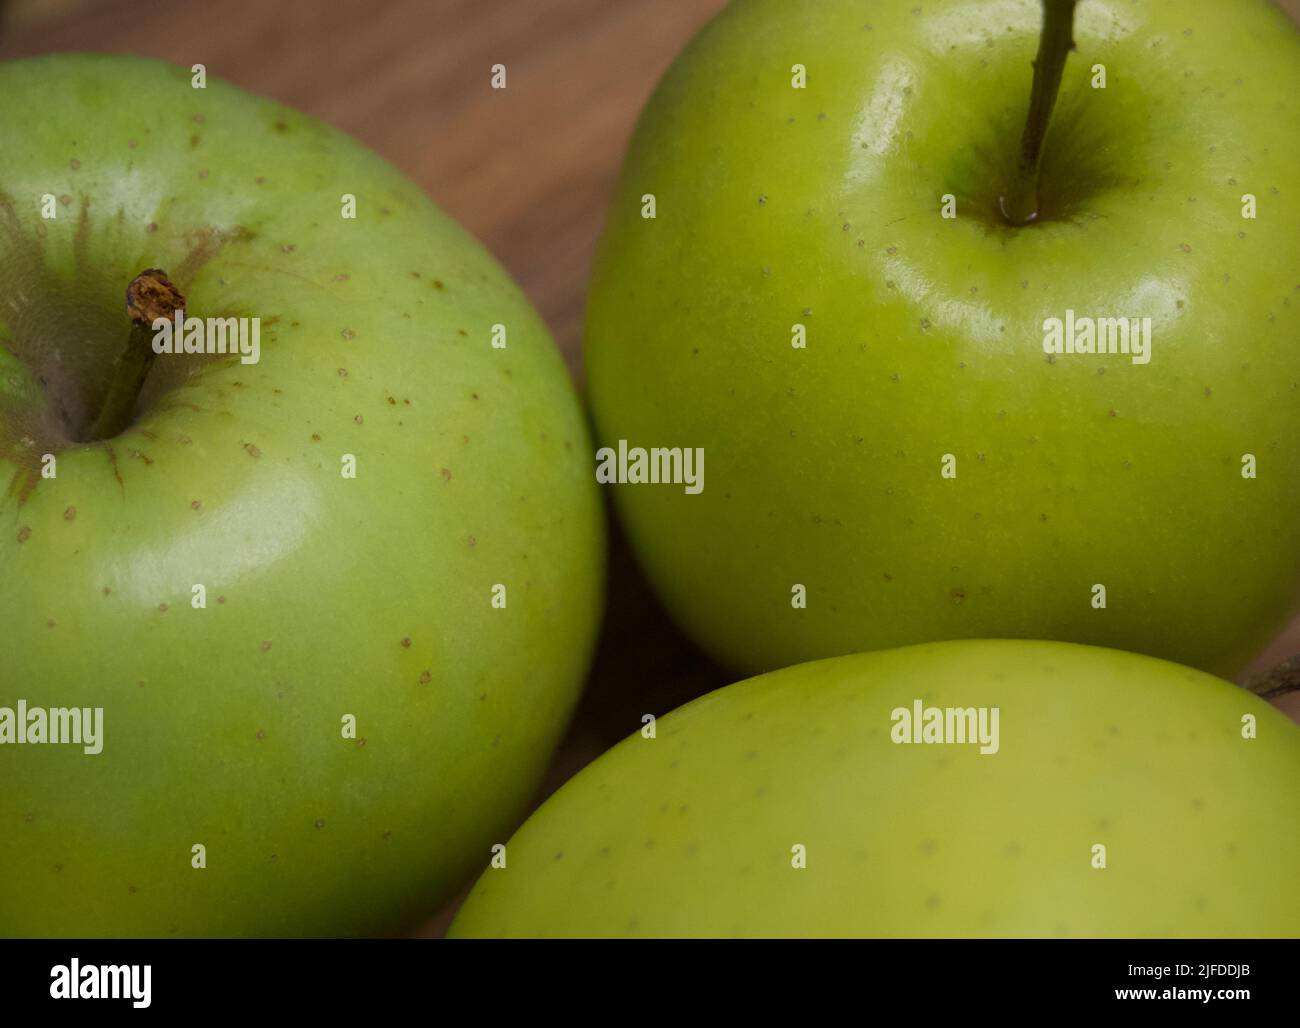 Renet simirenko green apples, top view, close-up. Macro shot of fruit. Stock Photo